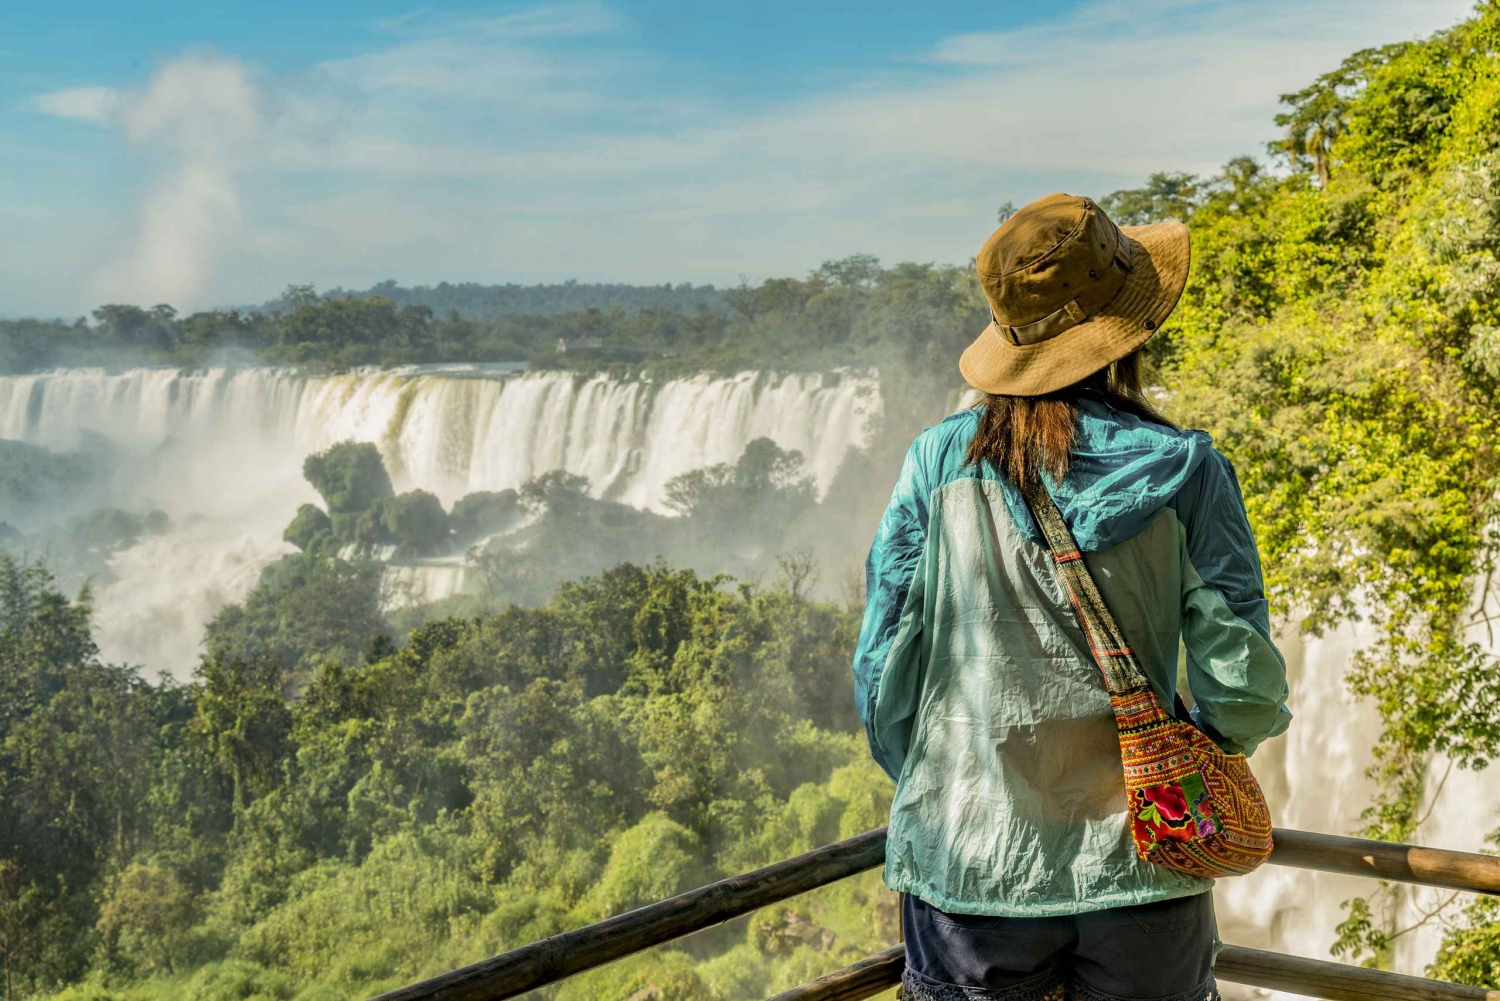 Puerto Iguazú Combo: Iguazu Falls 2 Day Tours + transfers